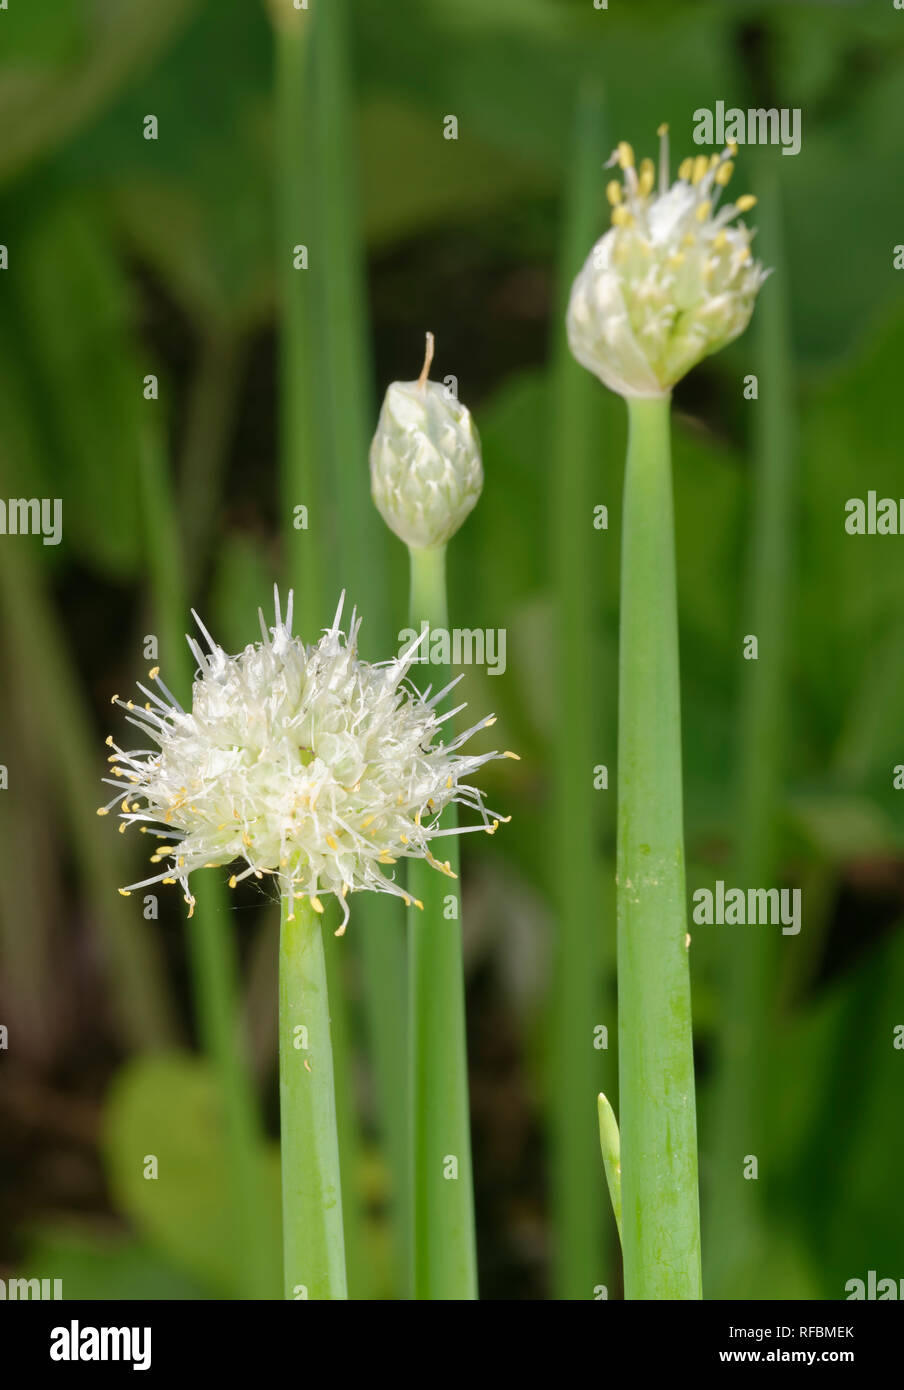 Welsh or Spring Onions - Allium fistulosum  Flower and buds Stock Photo